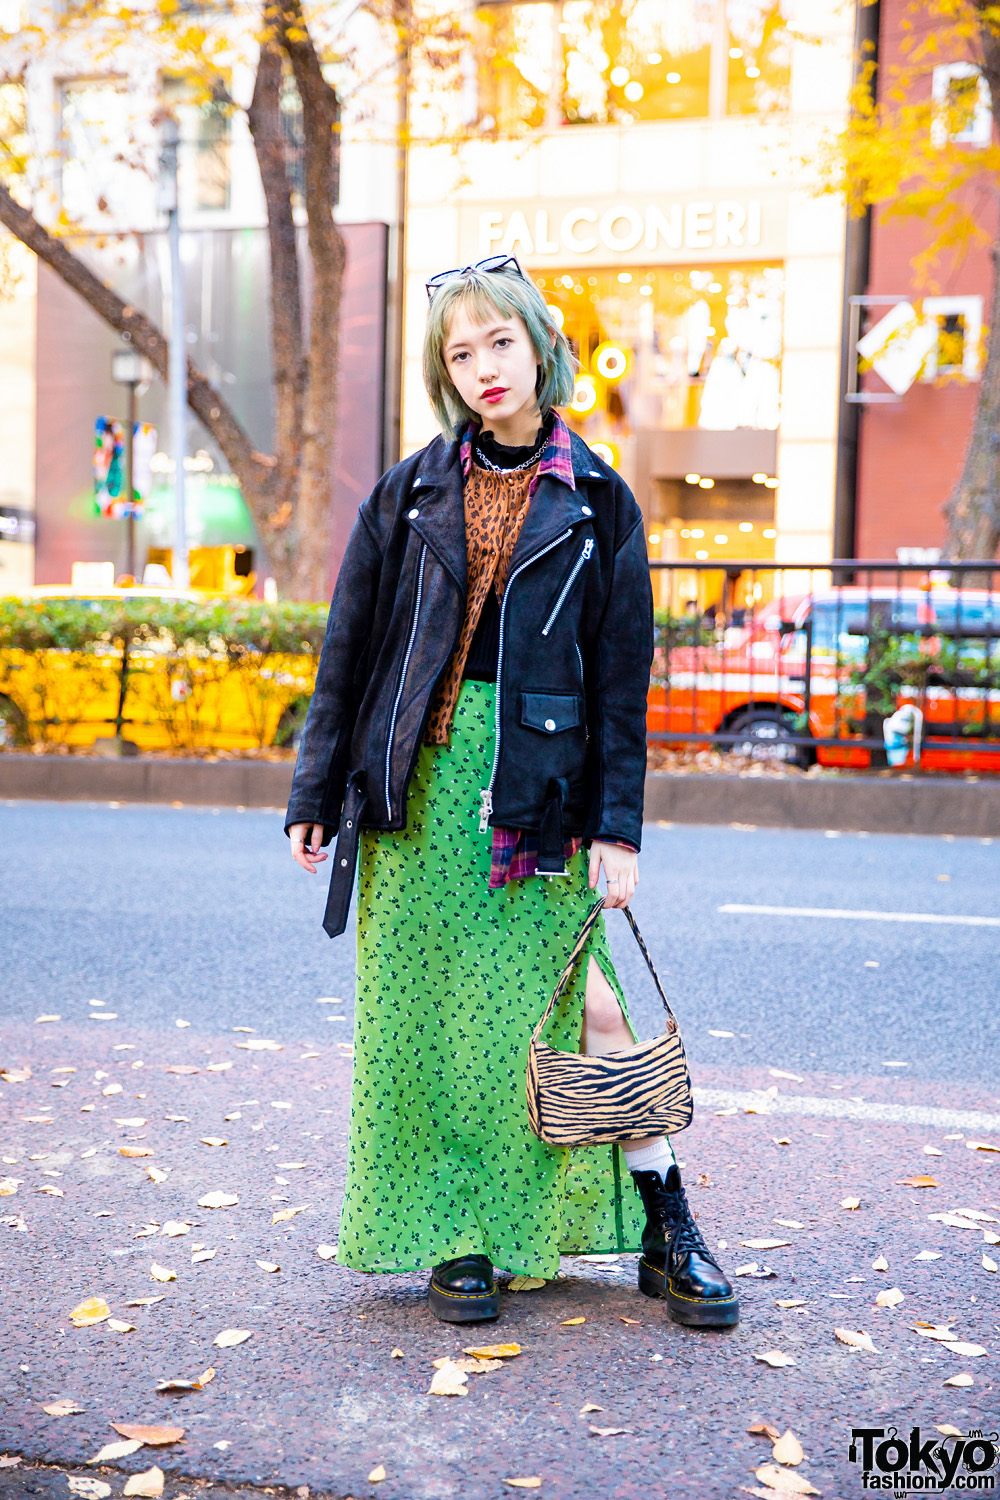 Japanese Model's X-Girl Street Style w/ Ombre Bob, Suede Jacket, Floral Print Maxi Skirt, Veil Handbag, Resale Fashion & Dr. Martens Boots